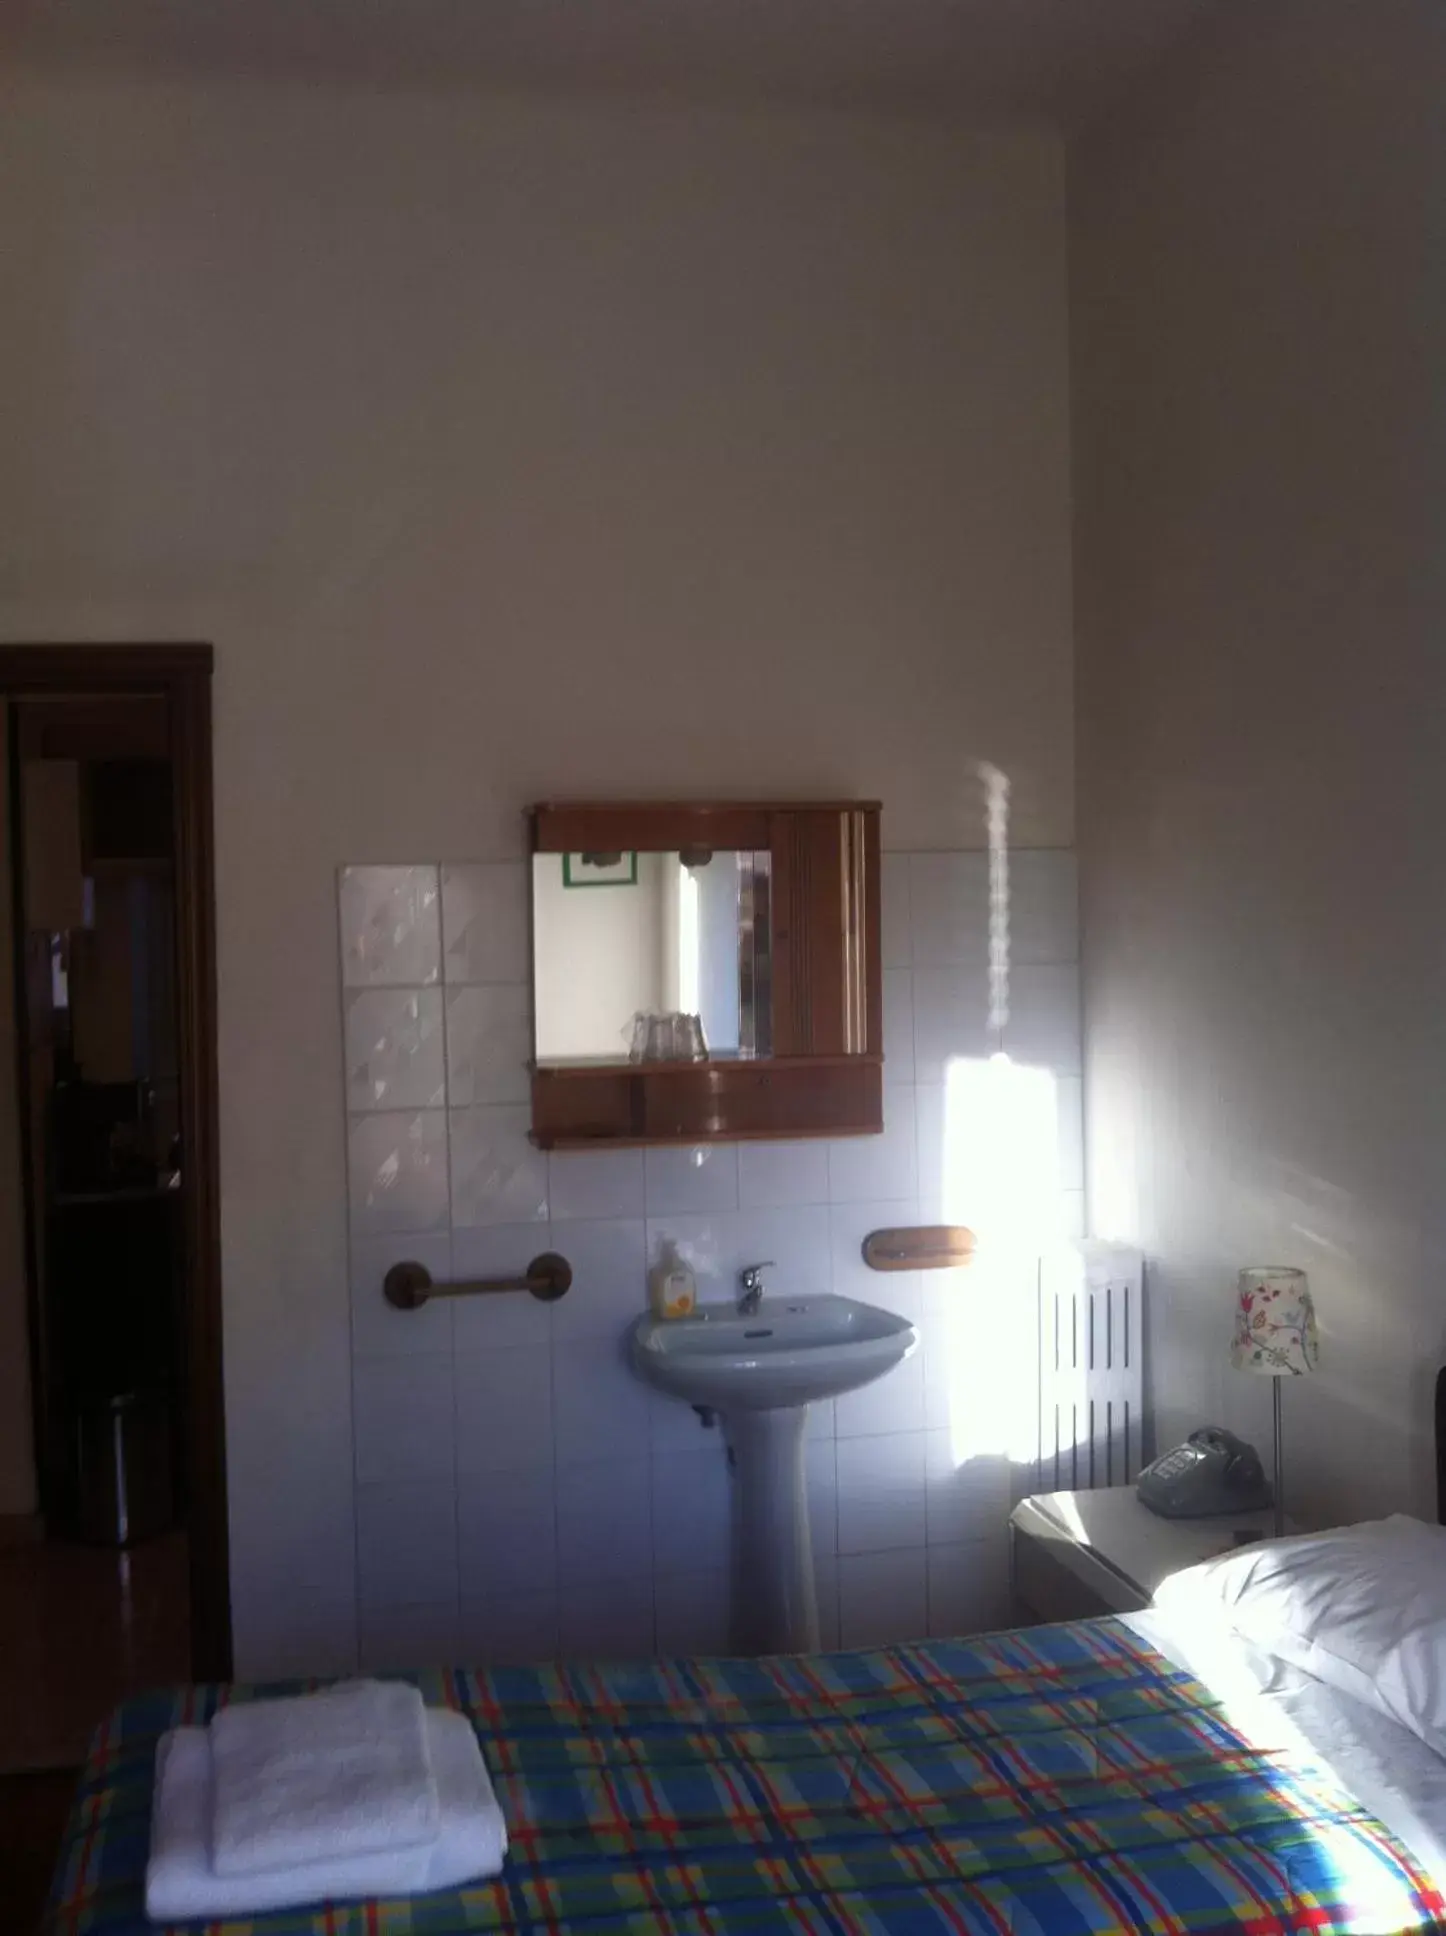 Photo of the whole room, Bathroom in Hotel Gambara